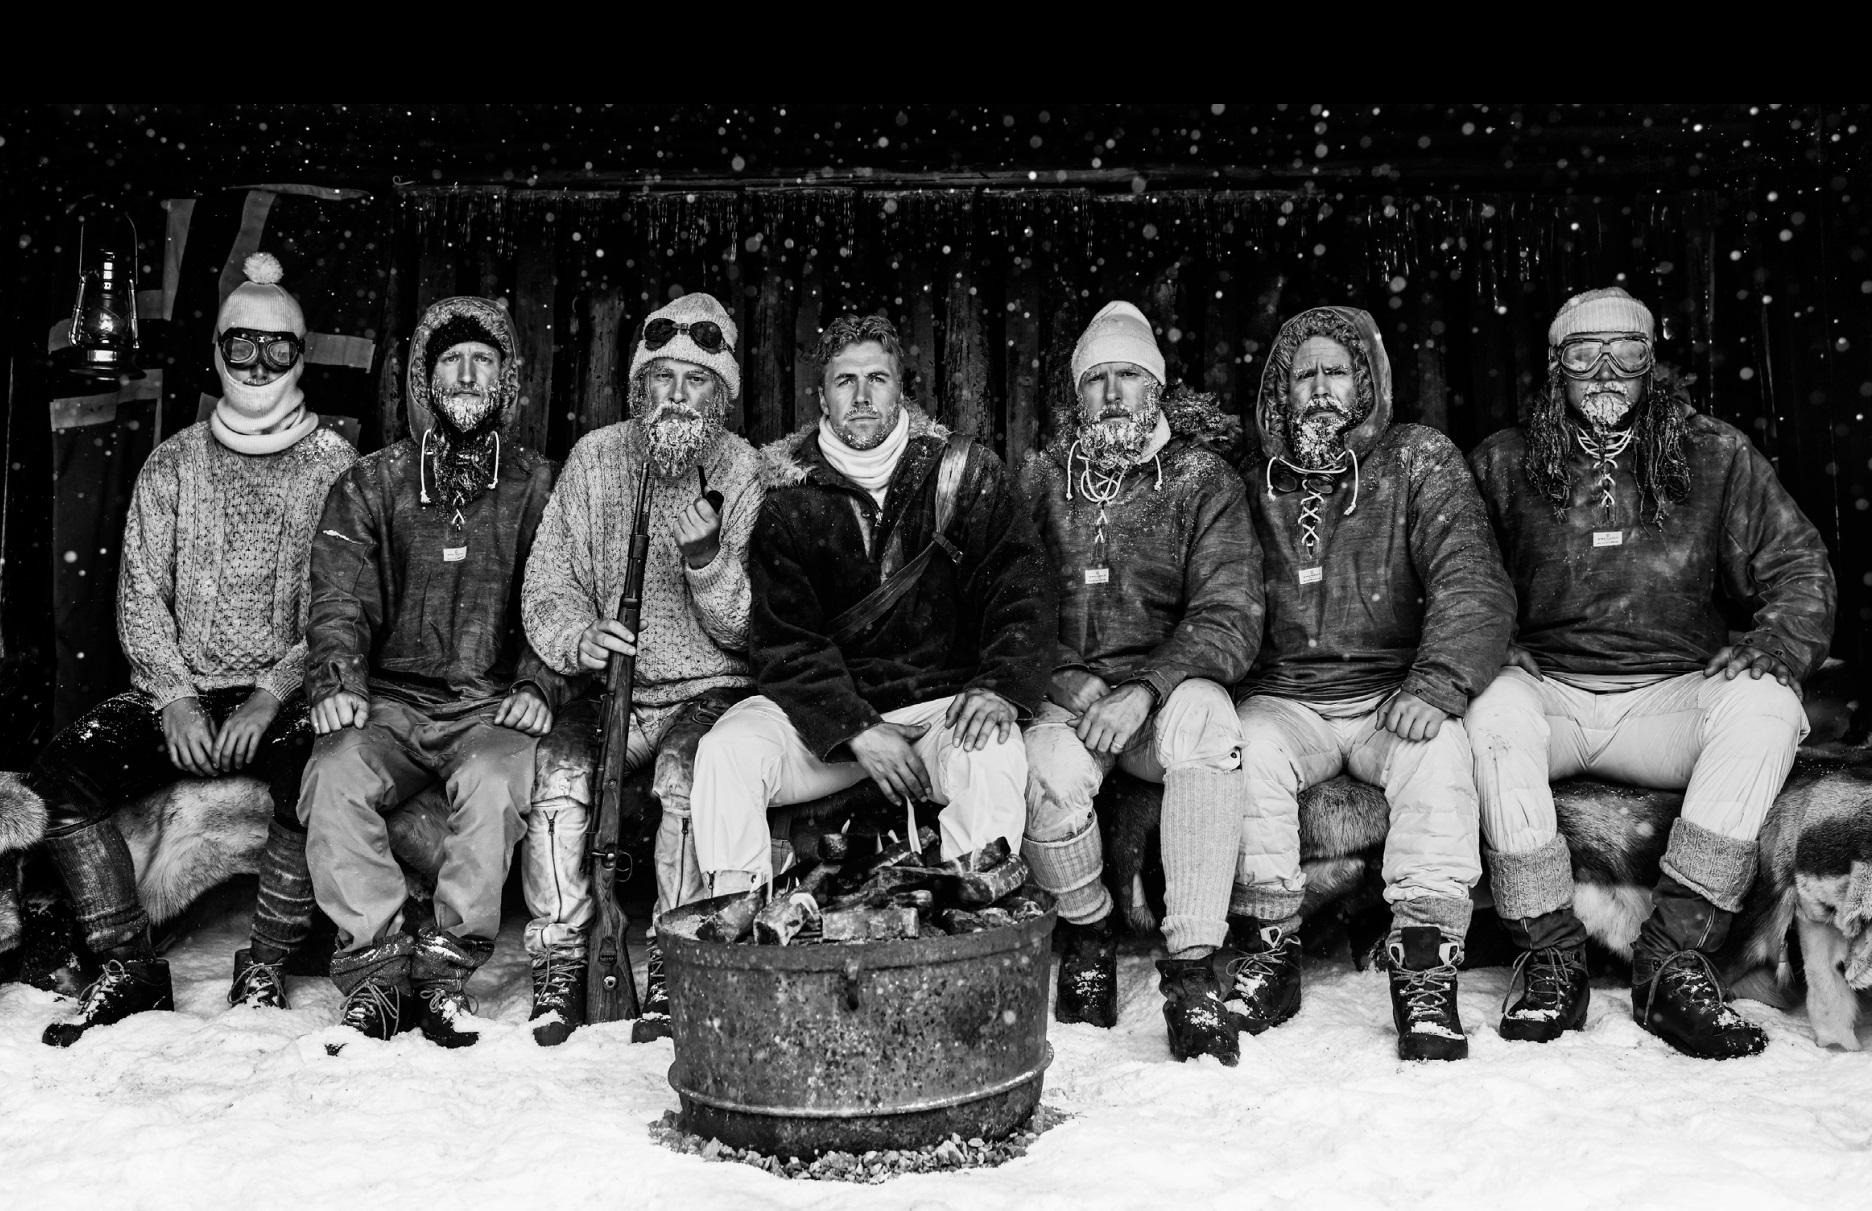 David Yarrow Black and White Photograph - Base Camp - World's Leading Alpine Ski Racer Aleksander Kilde Polar Exhibition